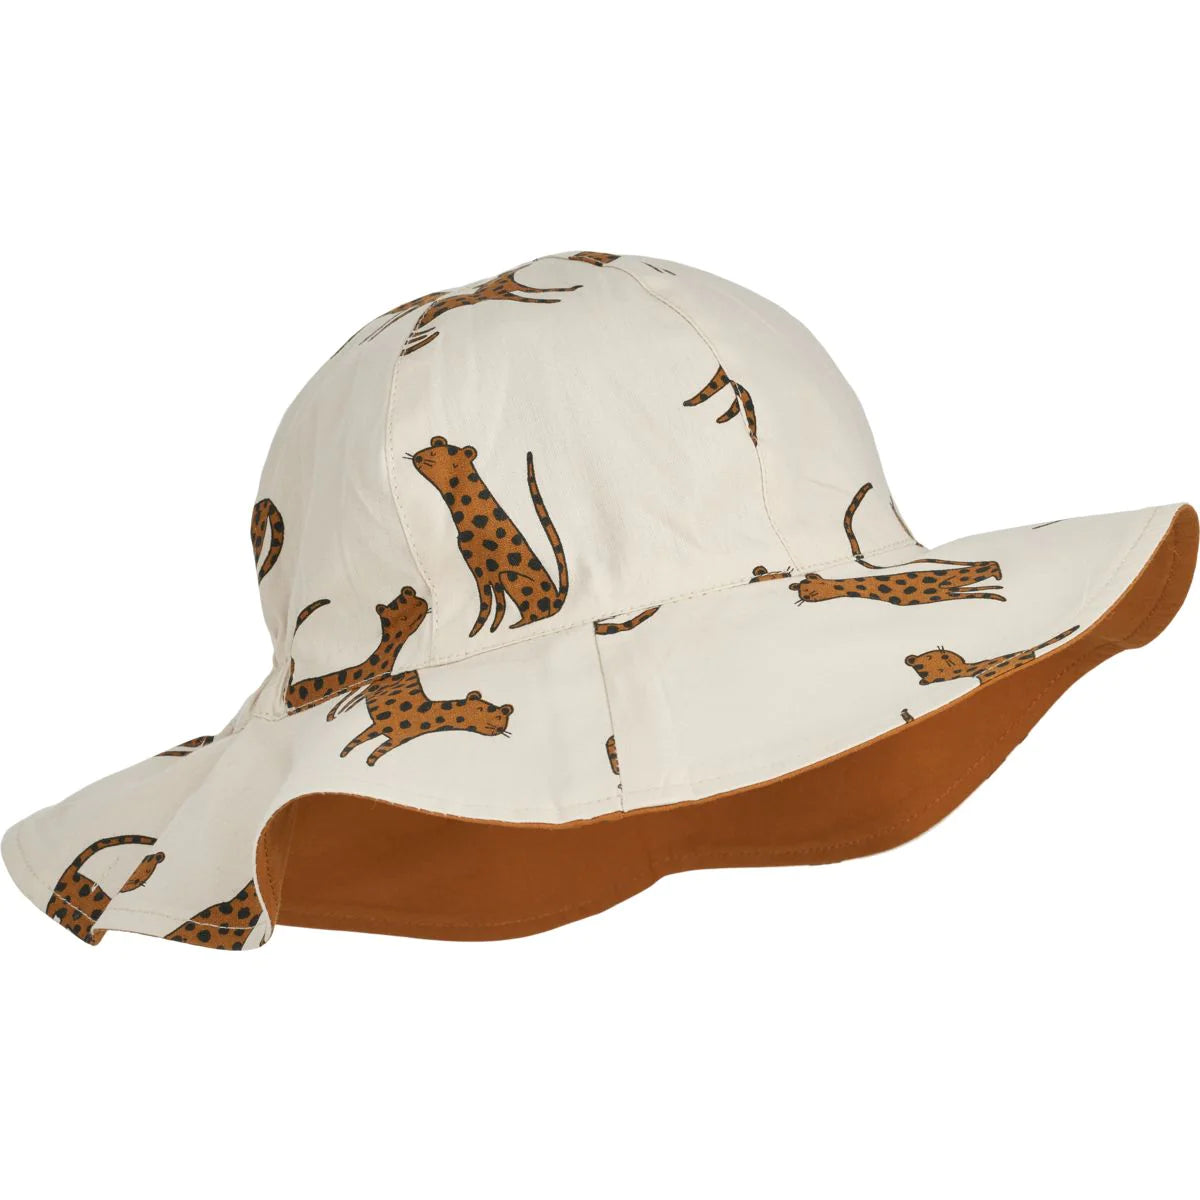 Liewood Amelia Sun Hat - Leopard / Sandy